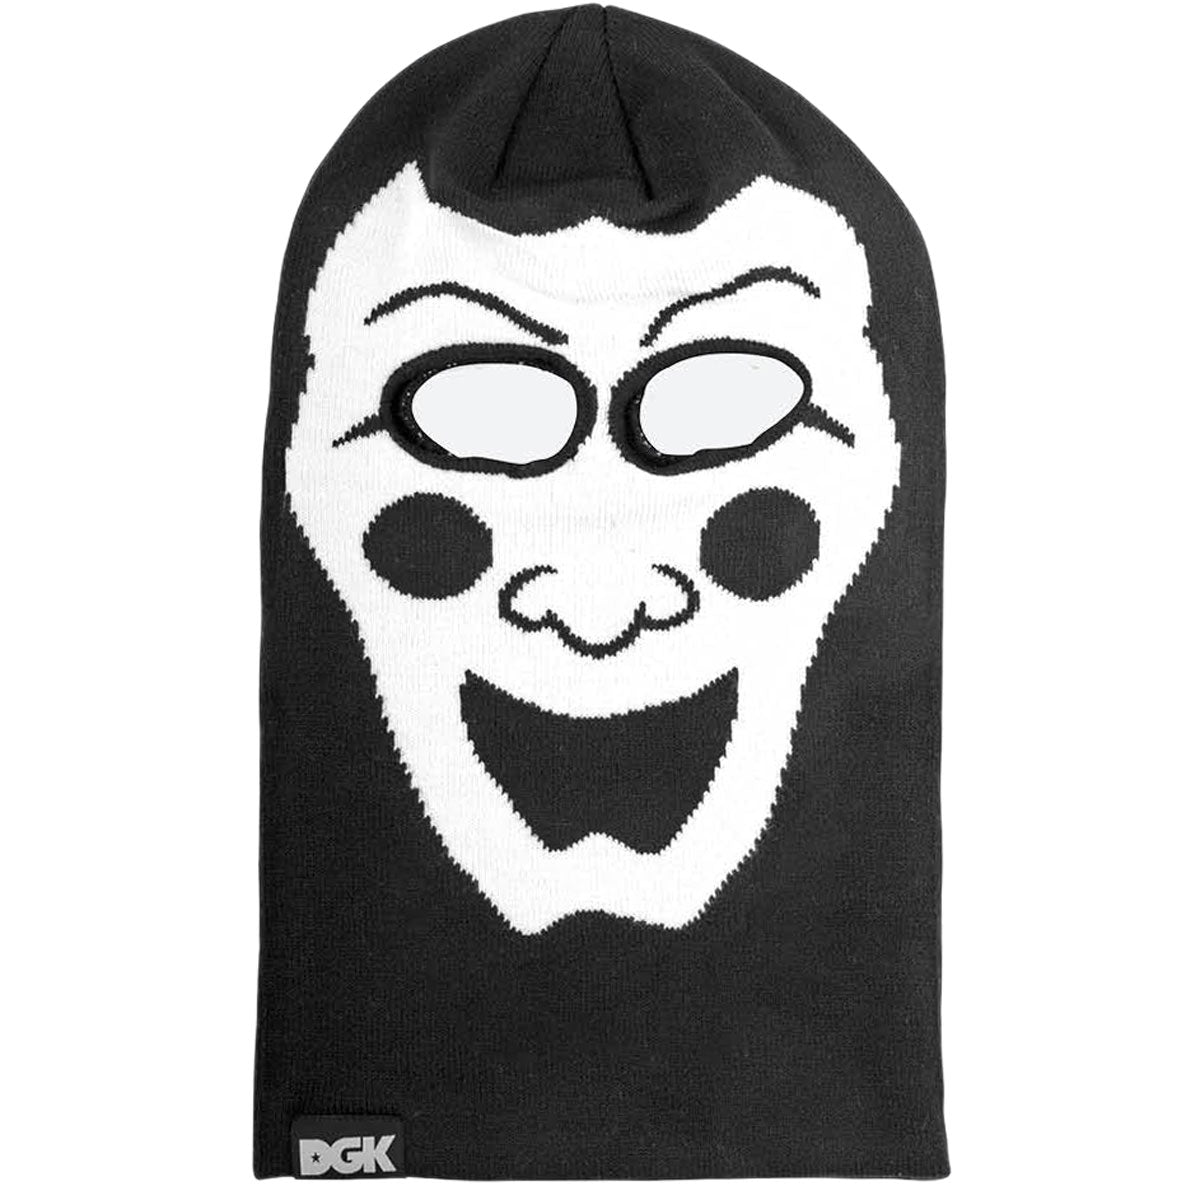 DGK Laugh Now, Cry Later Ski Mask - Black image 1